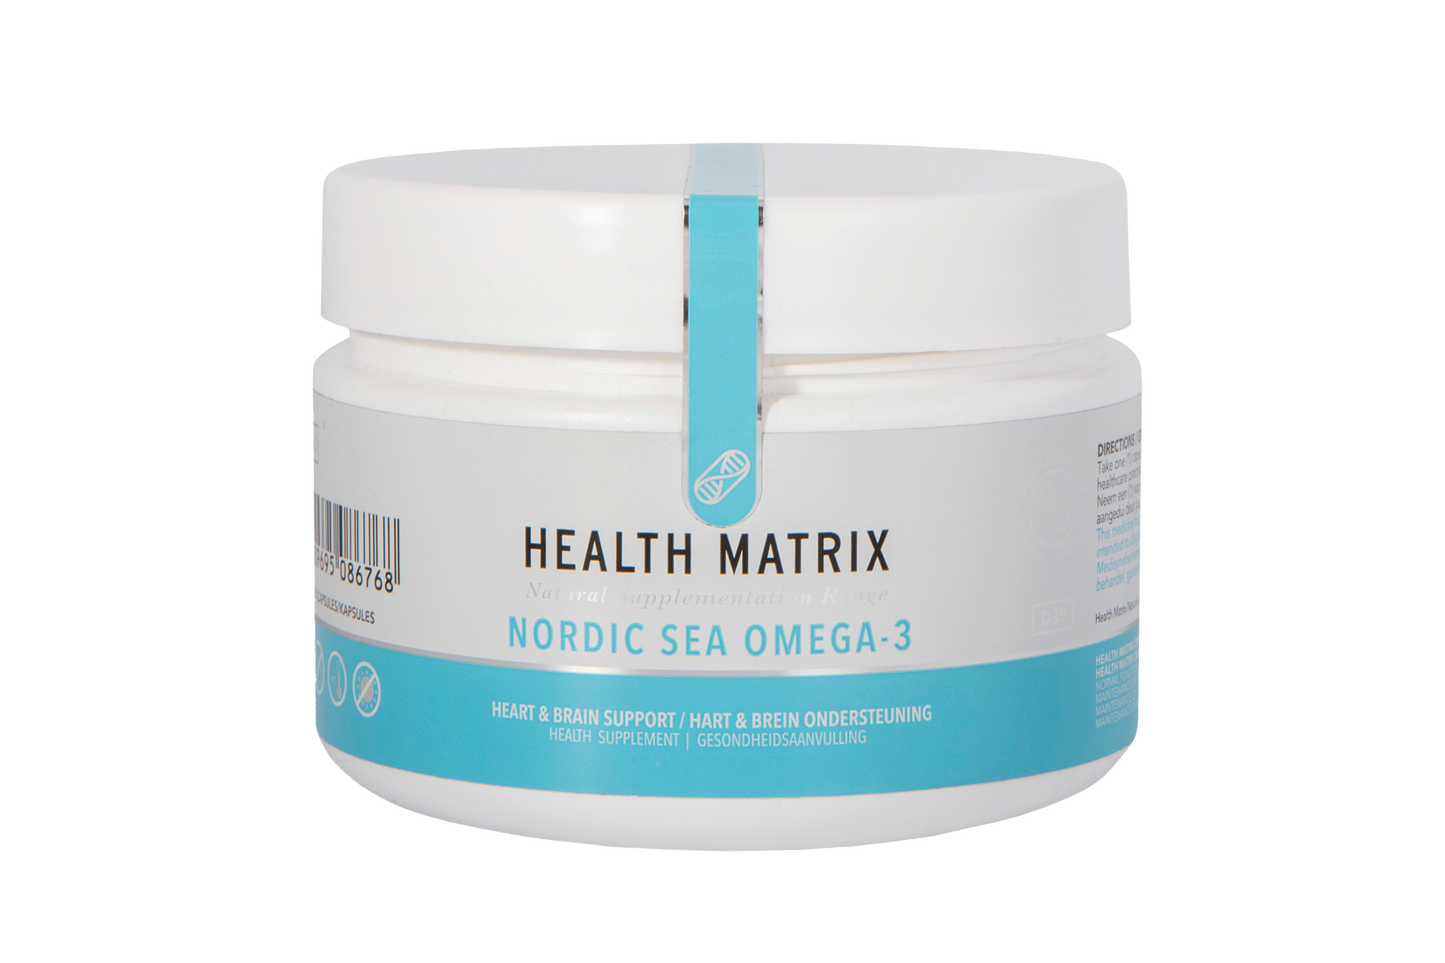 Health Matrix Nordic Sea Omega-3